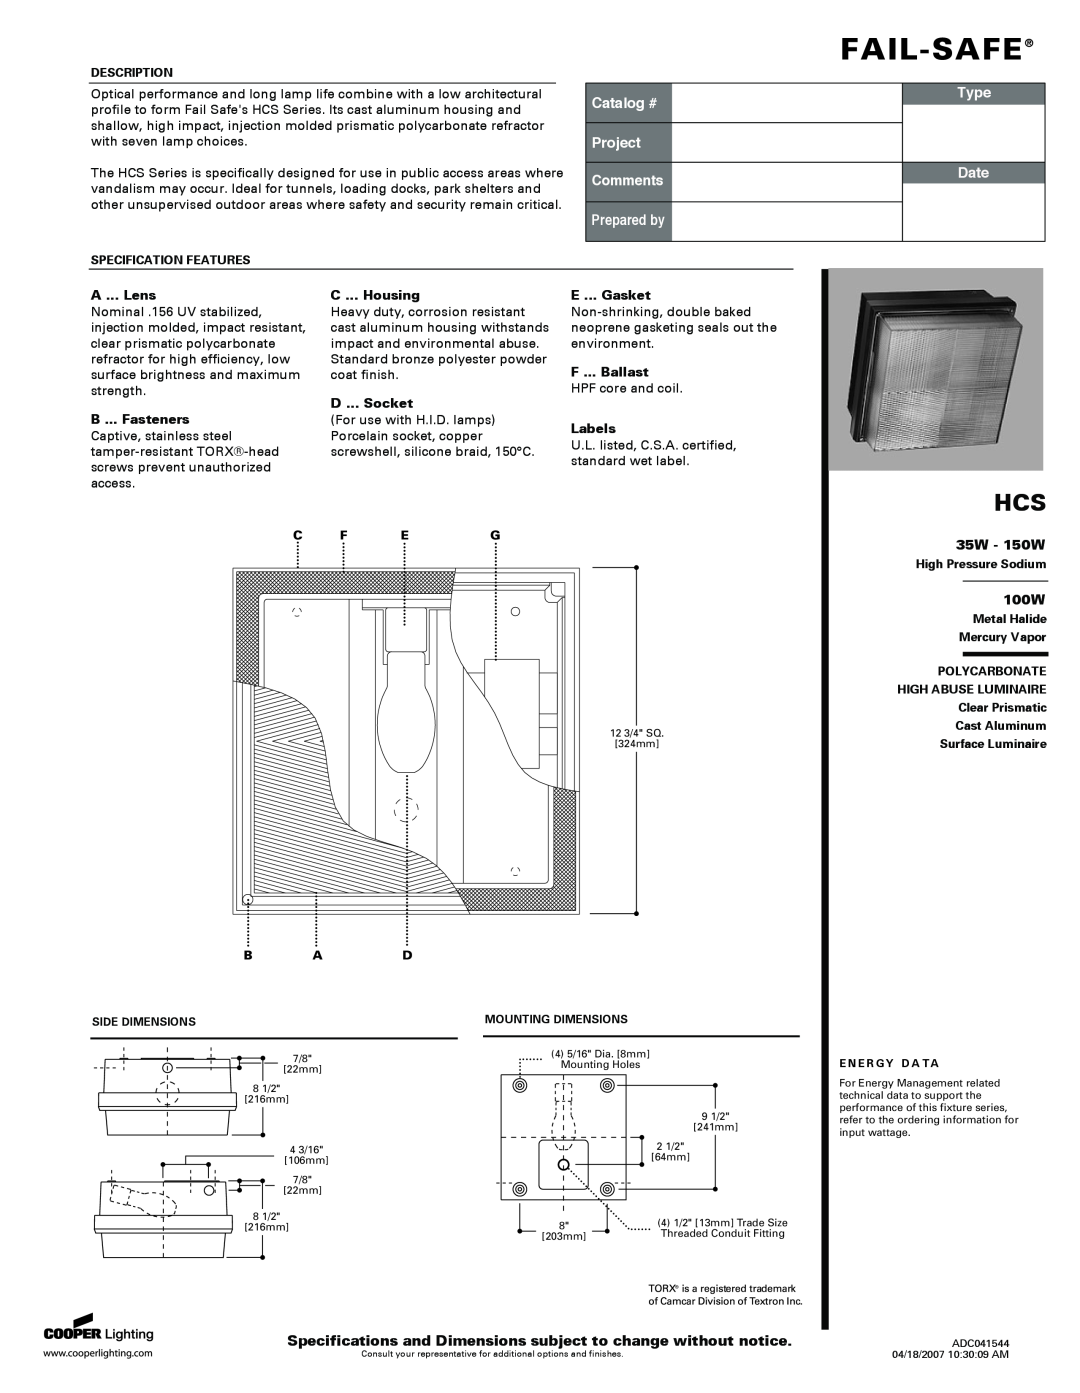 Cooper Lighting HCS specifications 35W - 150W, 100W, A ... Lens, B ... Fasteners, C ... Housing, D ... Socket, Labels 